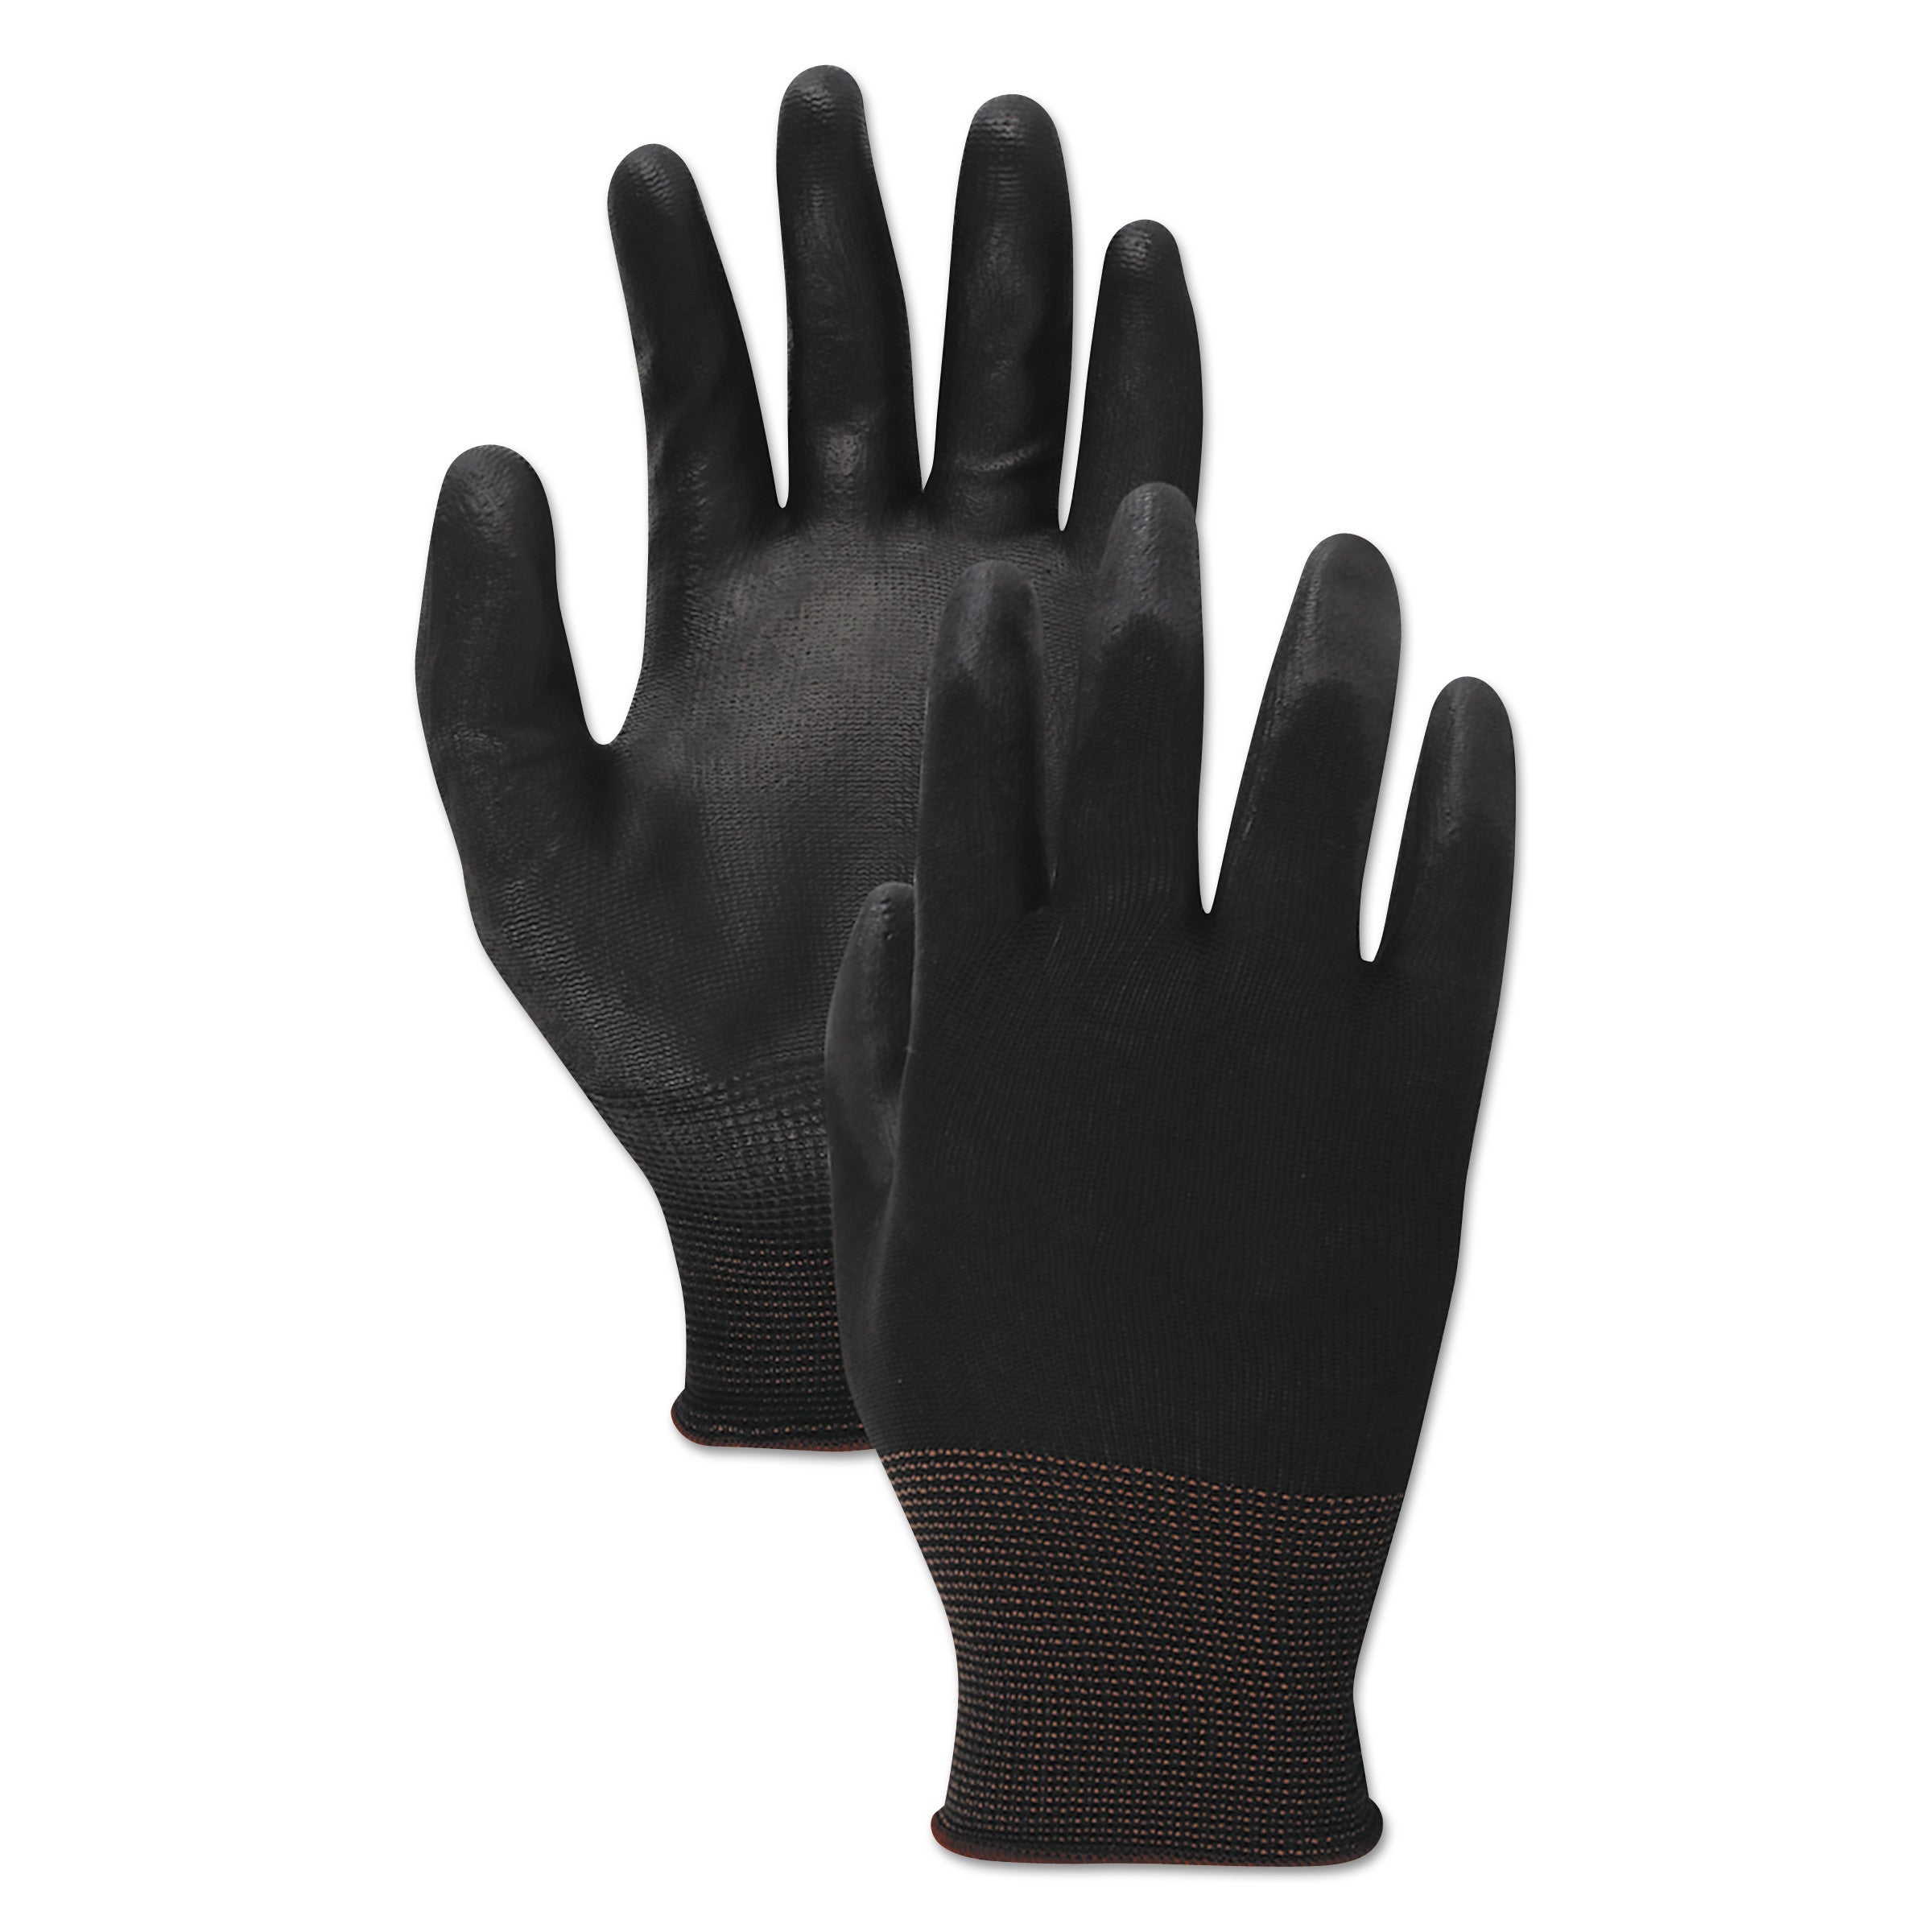 palm-coated-cut-resistant-hppe-glove-salt-and-pepper-black-size-8-medium-dozen_bwk000298 - 1